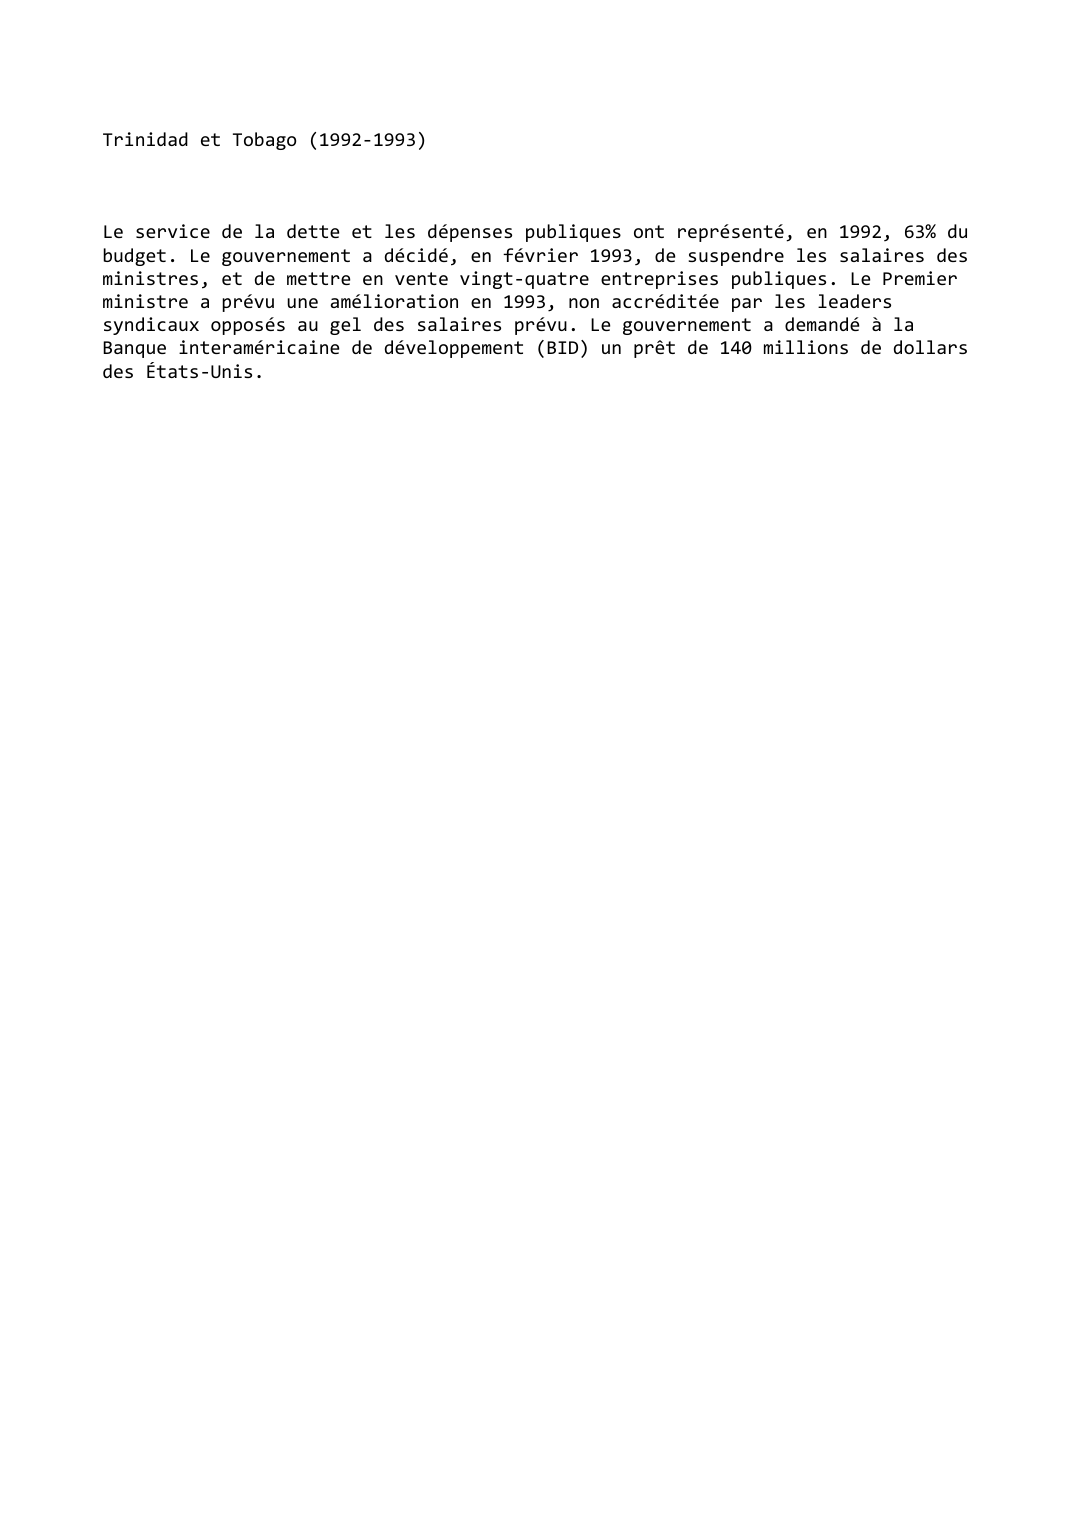 Prévisualisation du document Trinidad et Tobago (1992-1993)